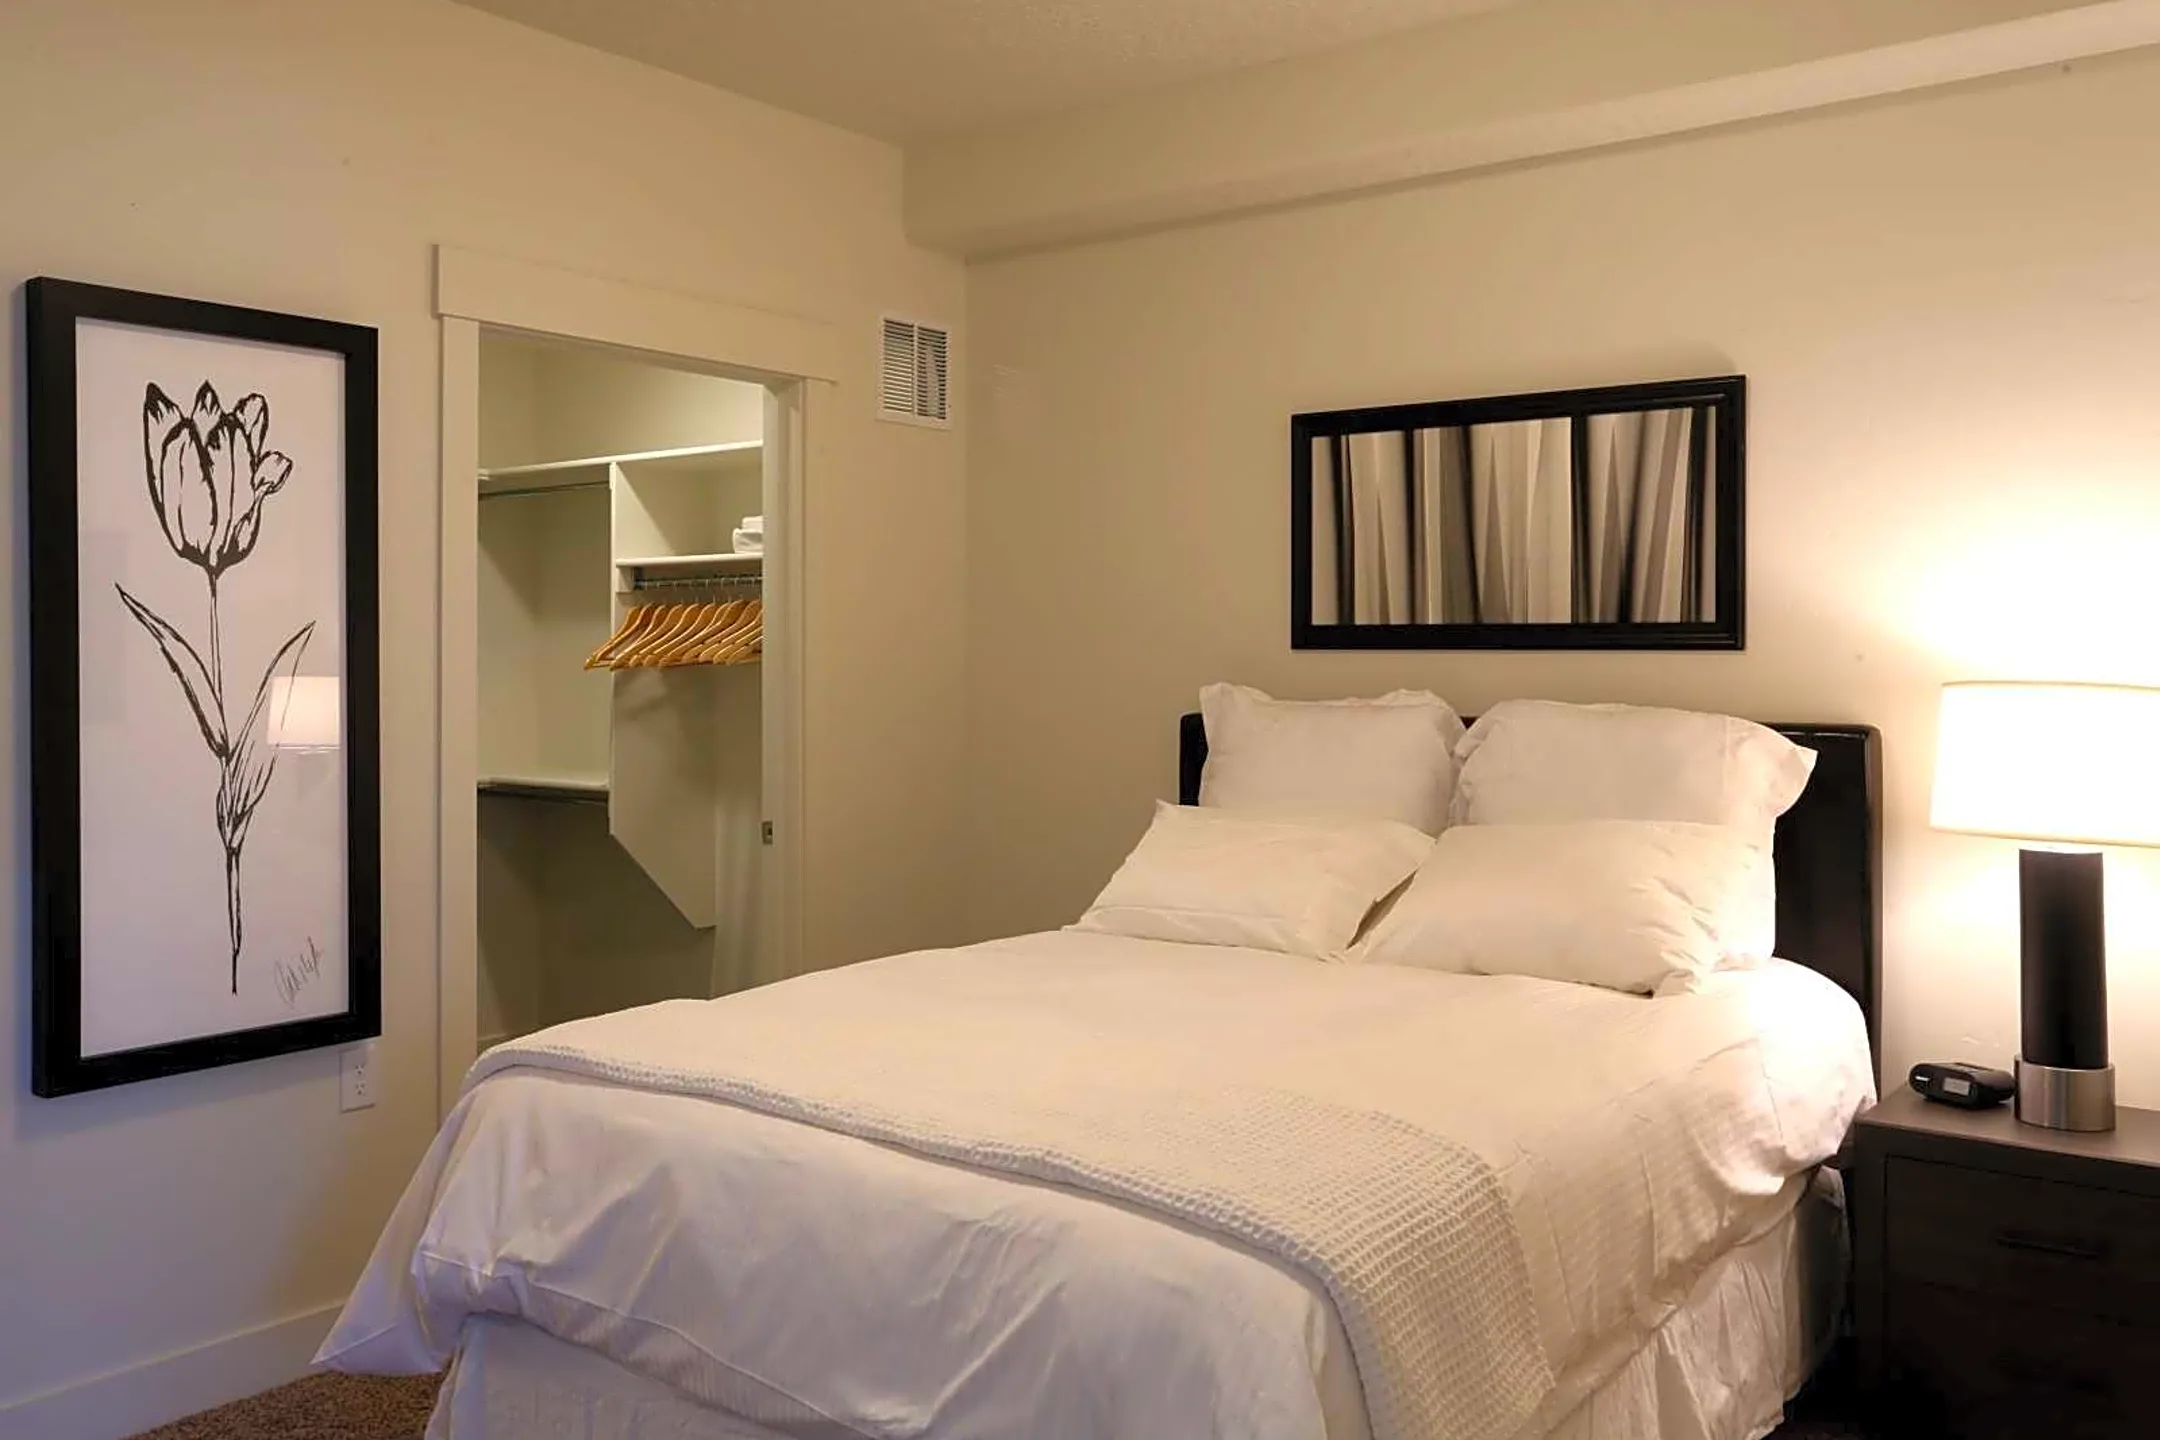 Bedroom - North Sixth Apartments - Salt Lake City, UT